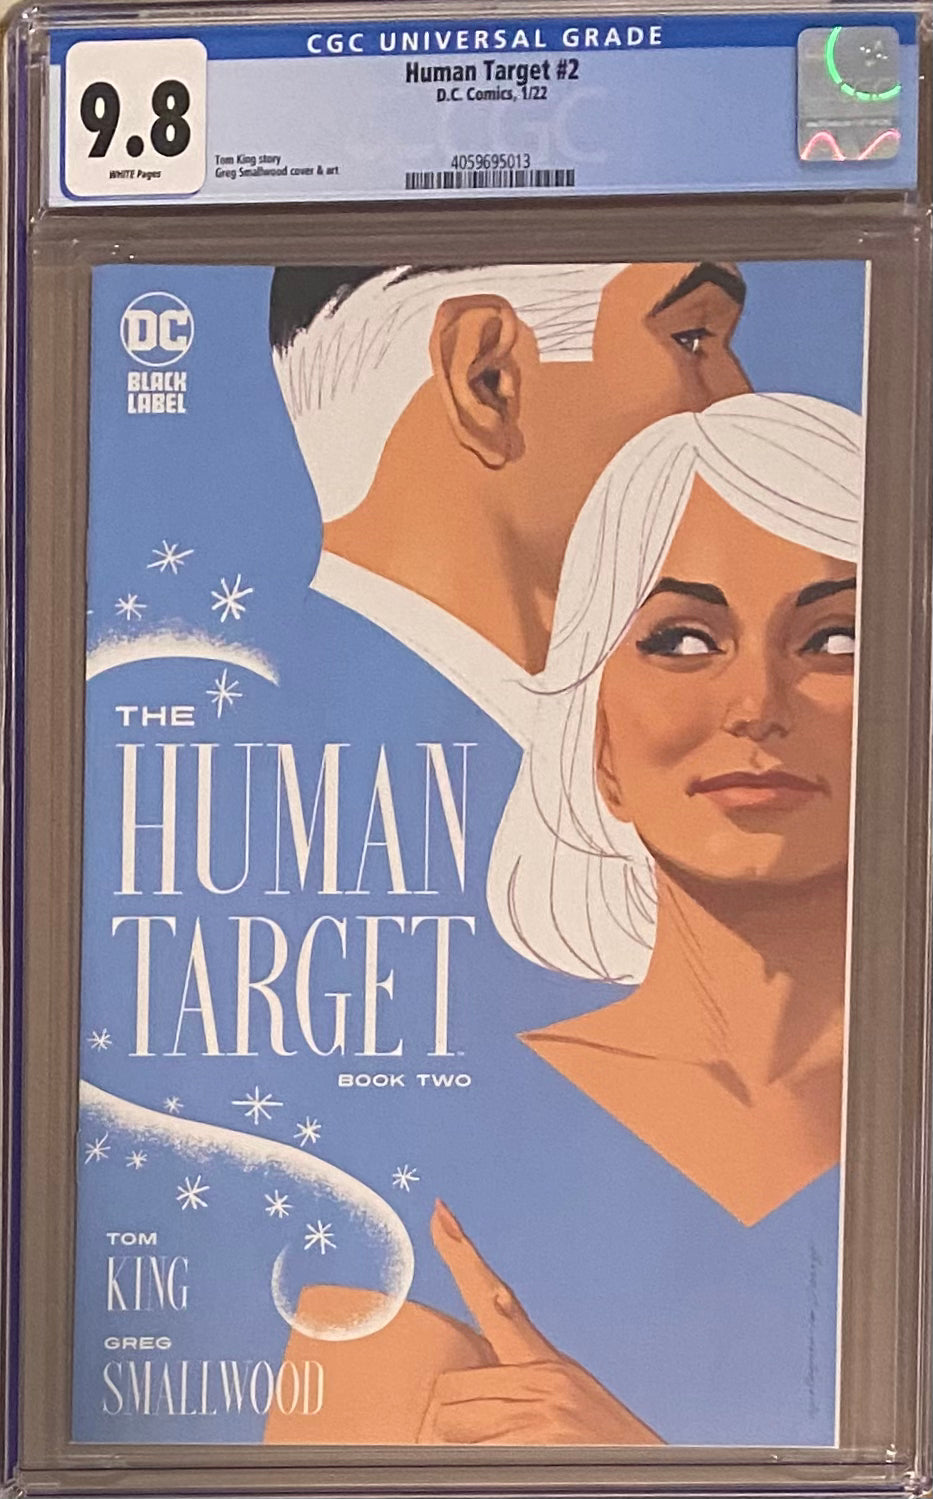 The Human Target #2 CGC 9.8 - DC Black Label